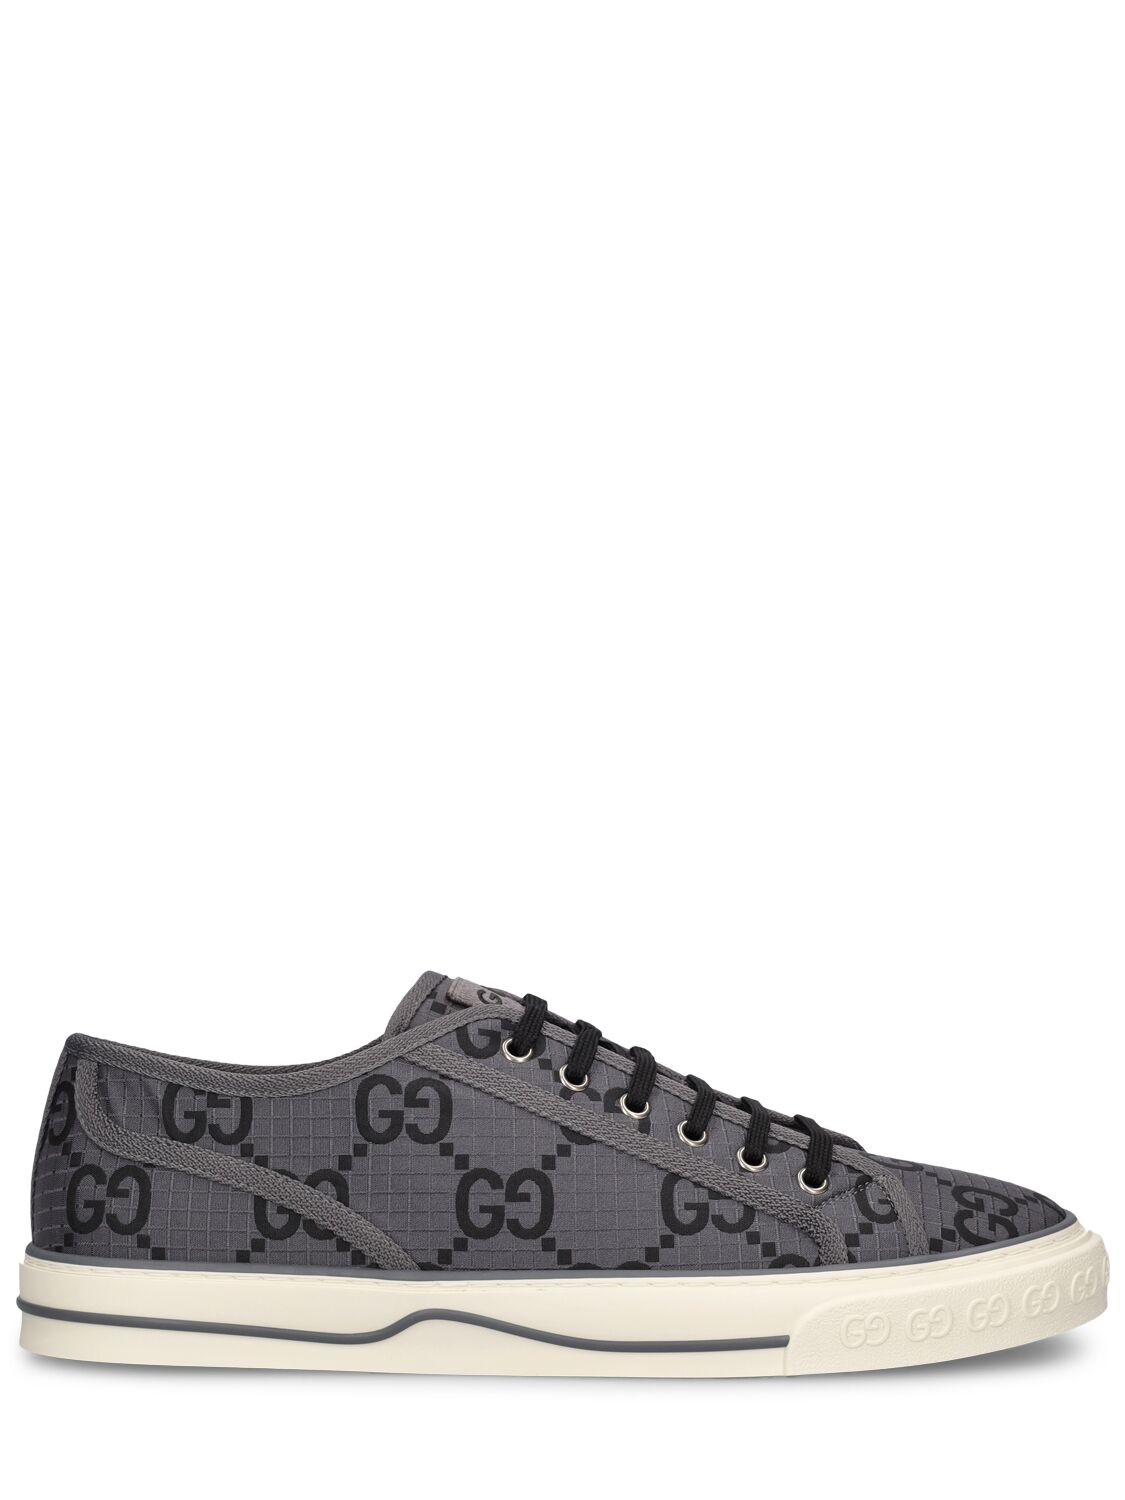 Gucci Gg Tennis Ripstop Tech Sneakers In Black,grey